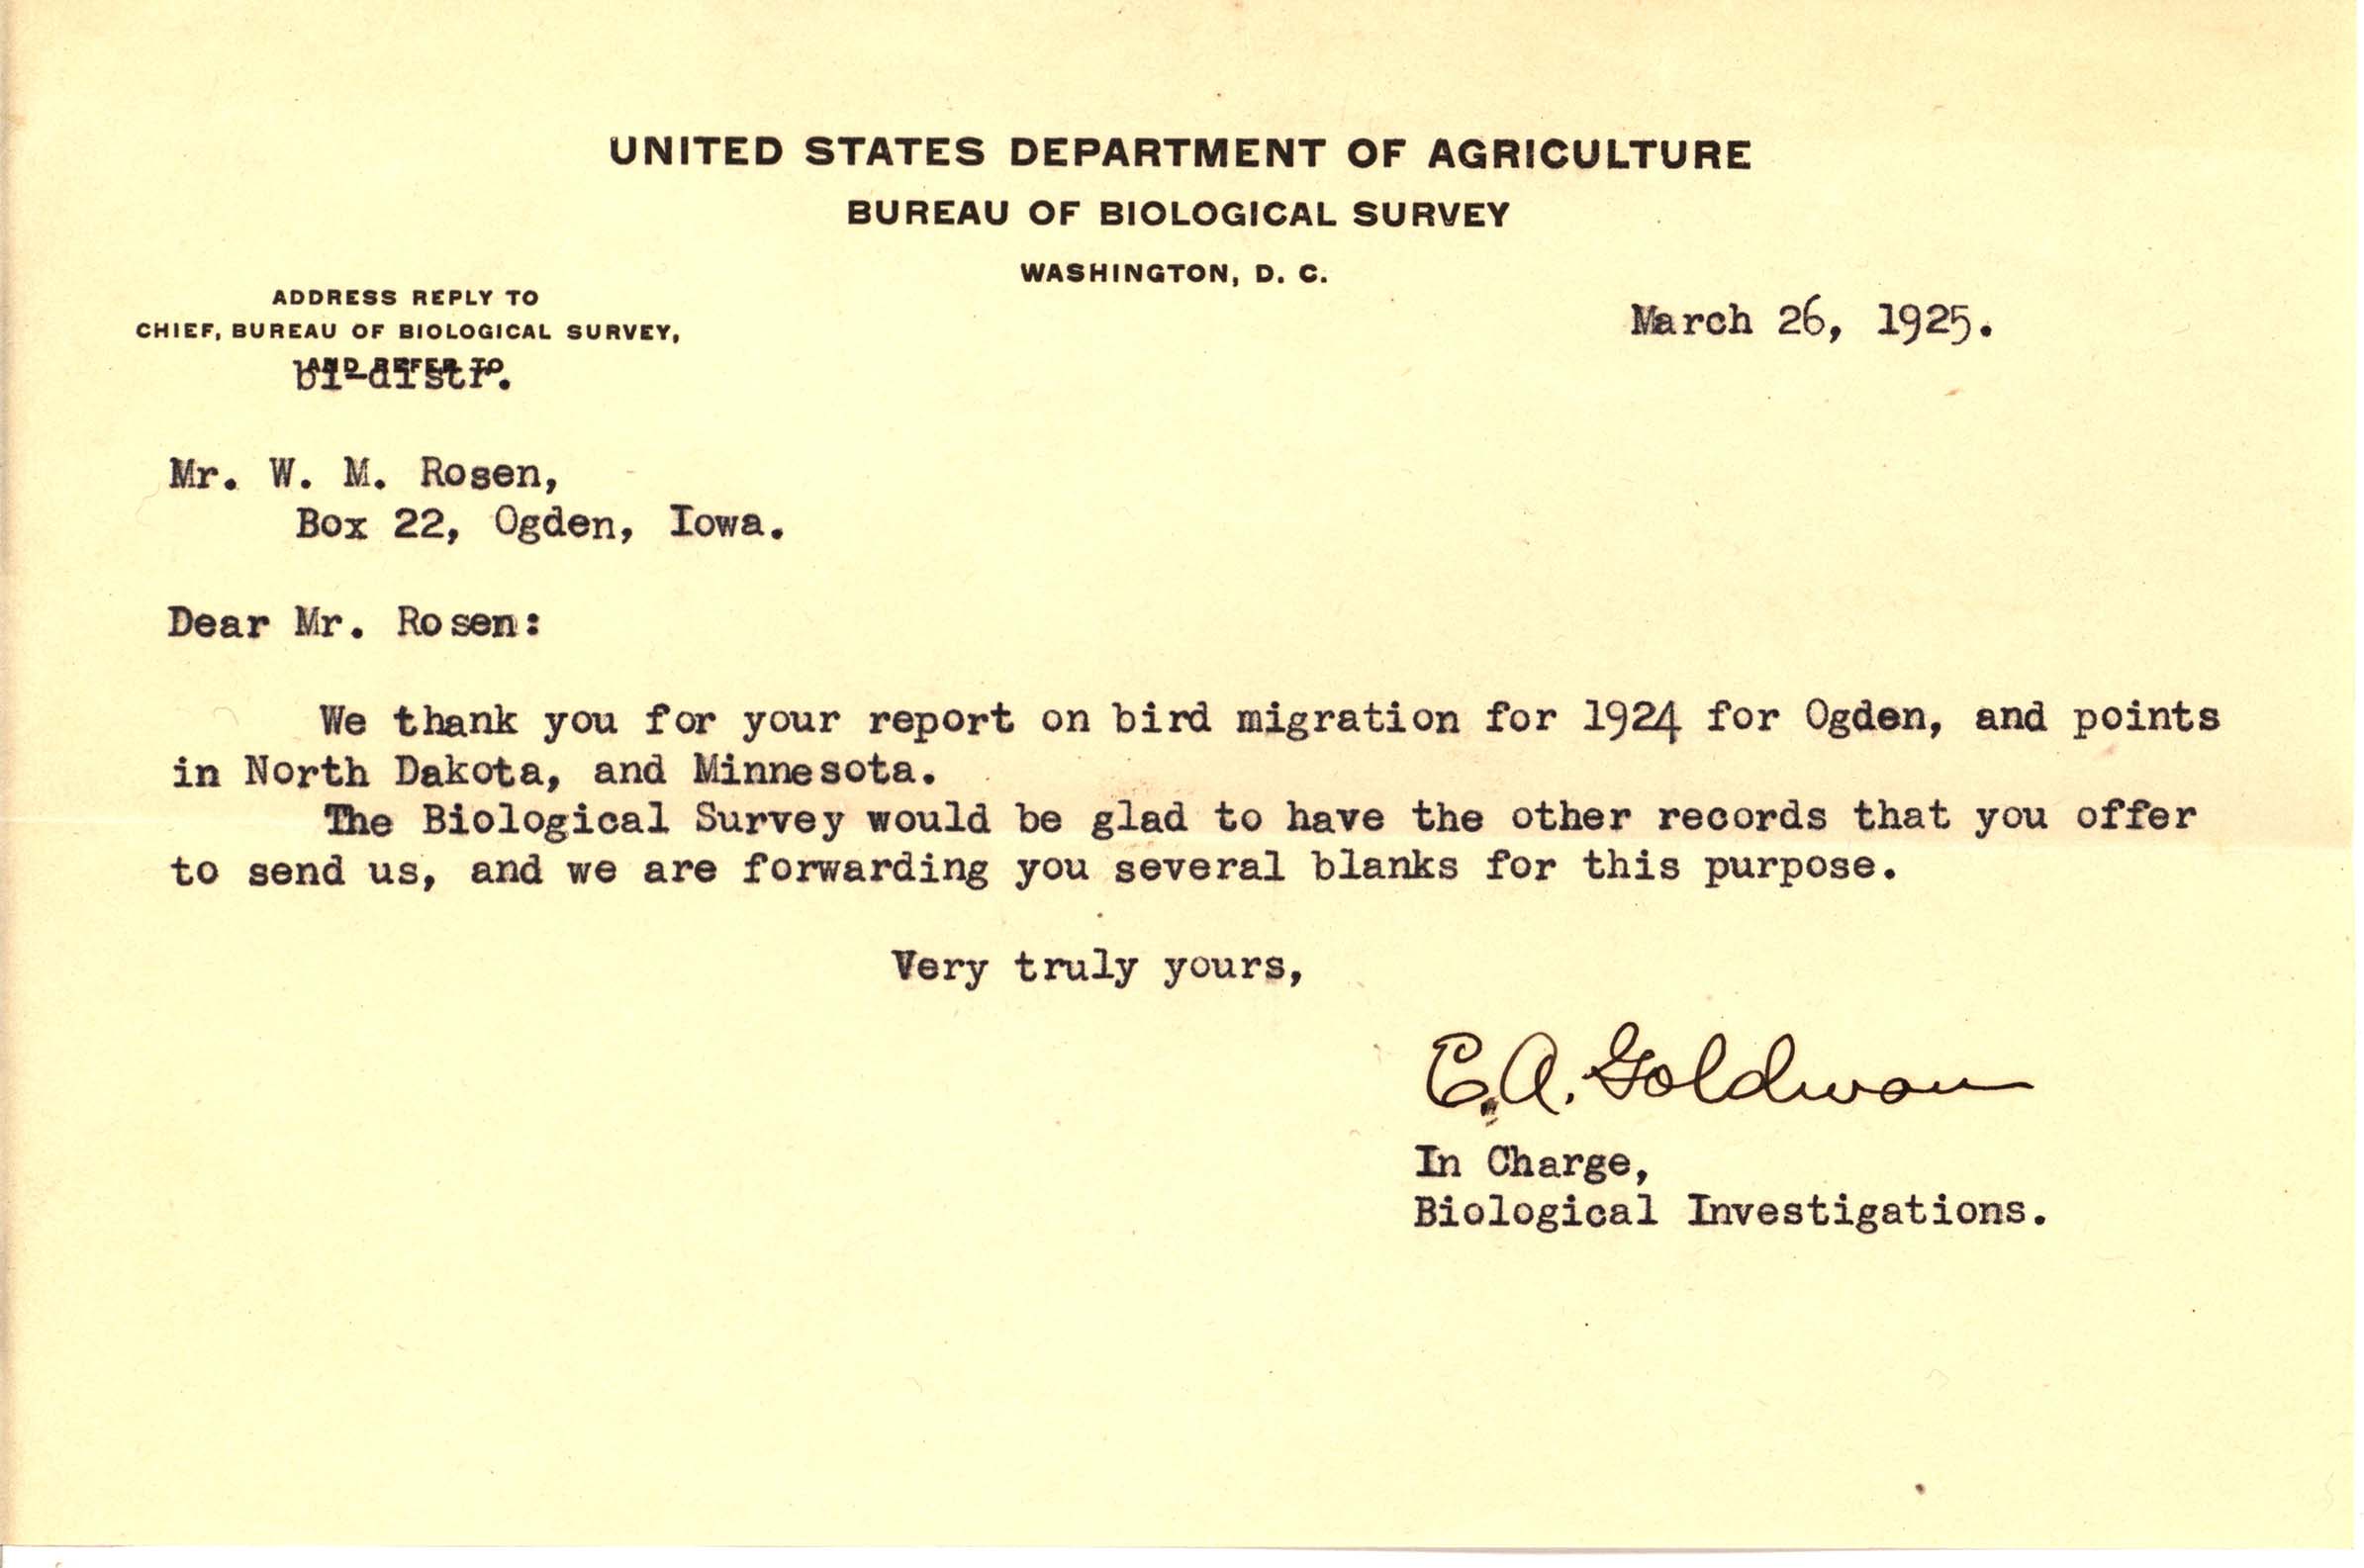 Edward Alphonso Goldman letter to Walter Rosene regarding the receipt of the 1924 bird migration report from Ogden, North Dakota, and Minnesota, March 26, 1925